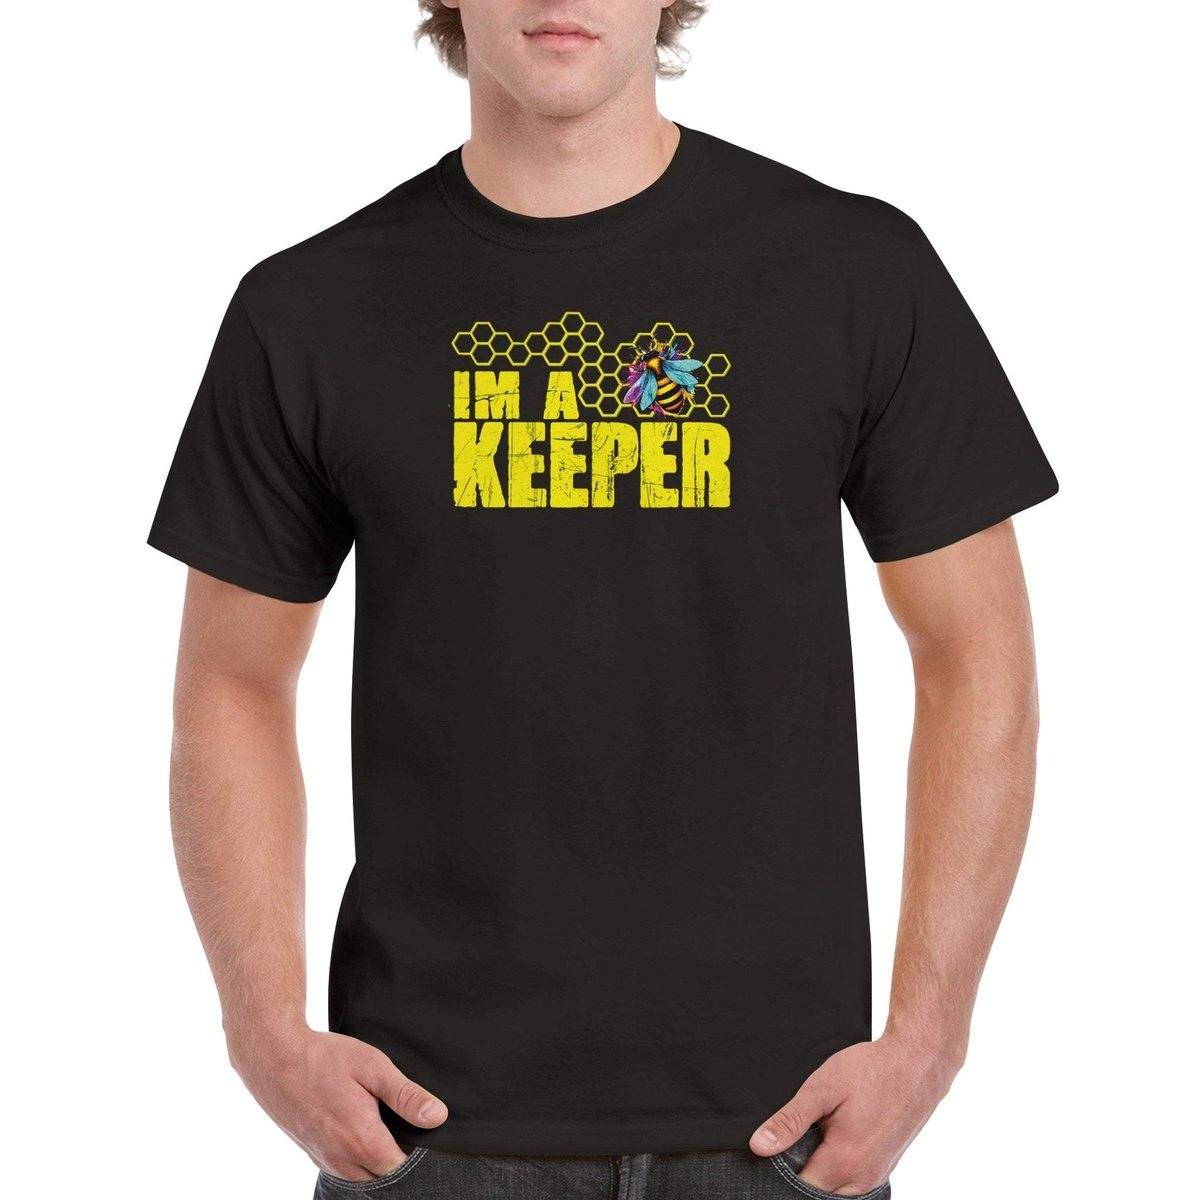 I'm a keeper Tshirt - Neon Bee - Unisex Crewneck T-shirt Australia Online Color